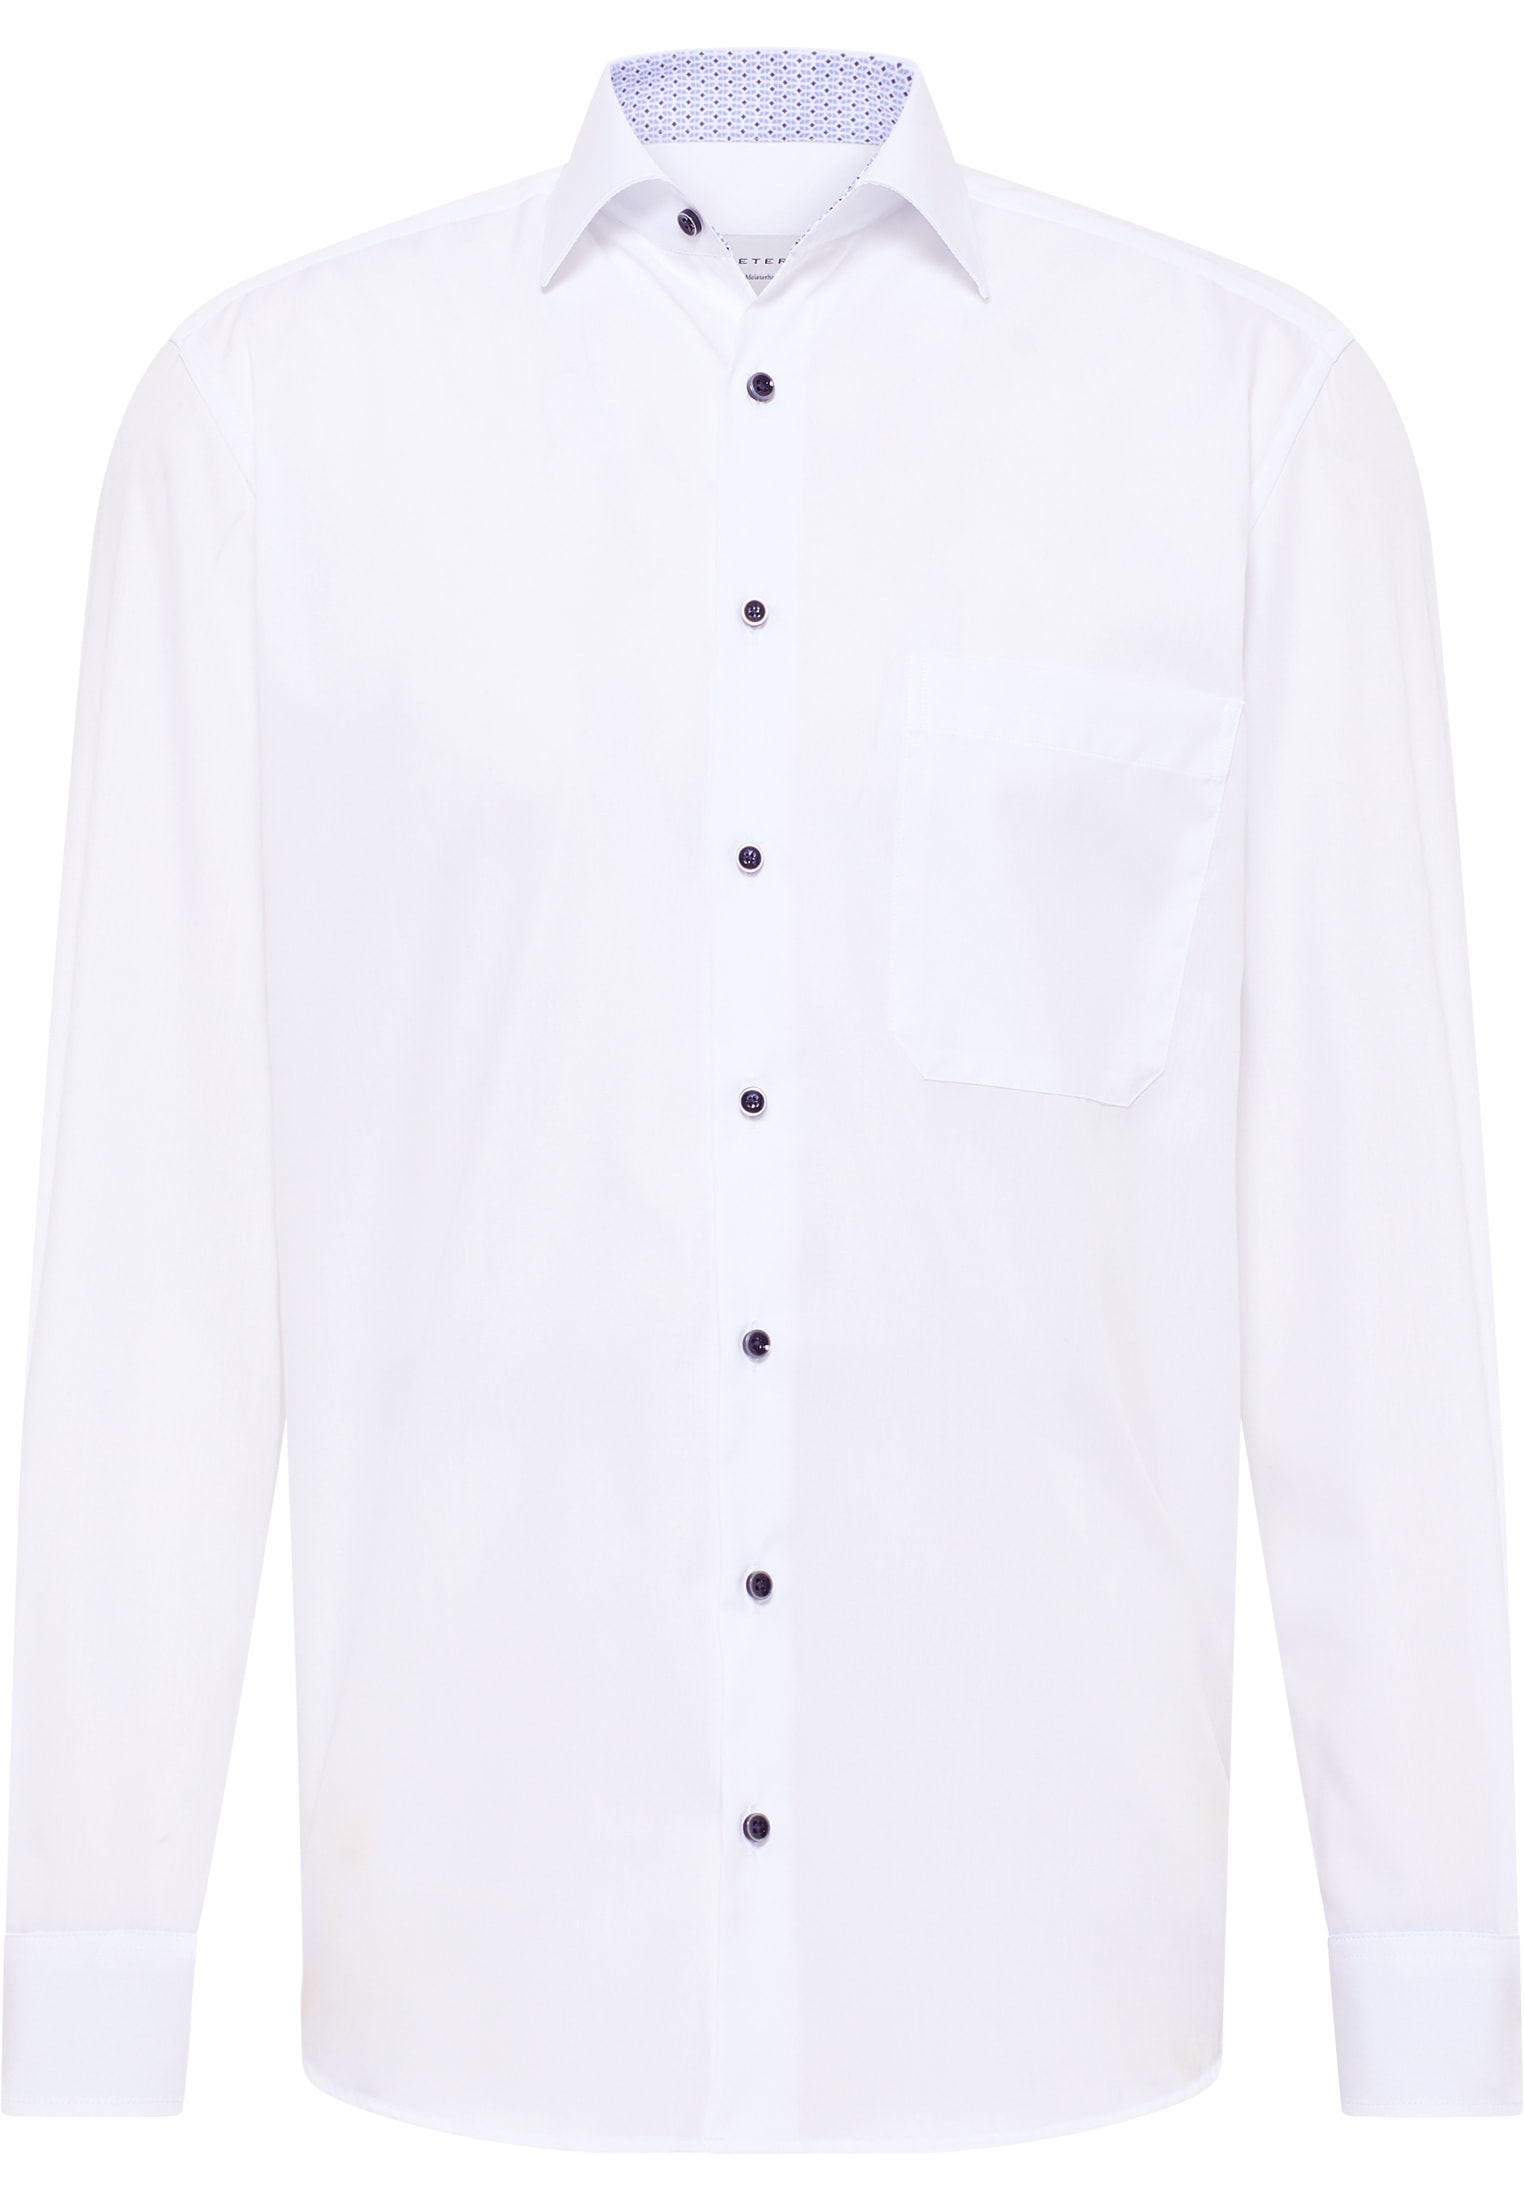 COMFORT FIT Original Shirt in weiß unifarben | weiß | Langarm | 48 |  1SH12864-00-01-48-1/1